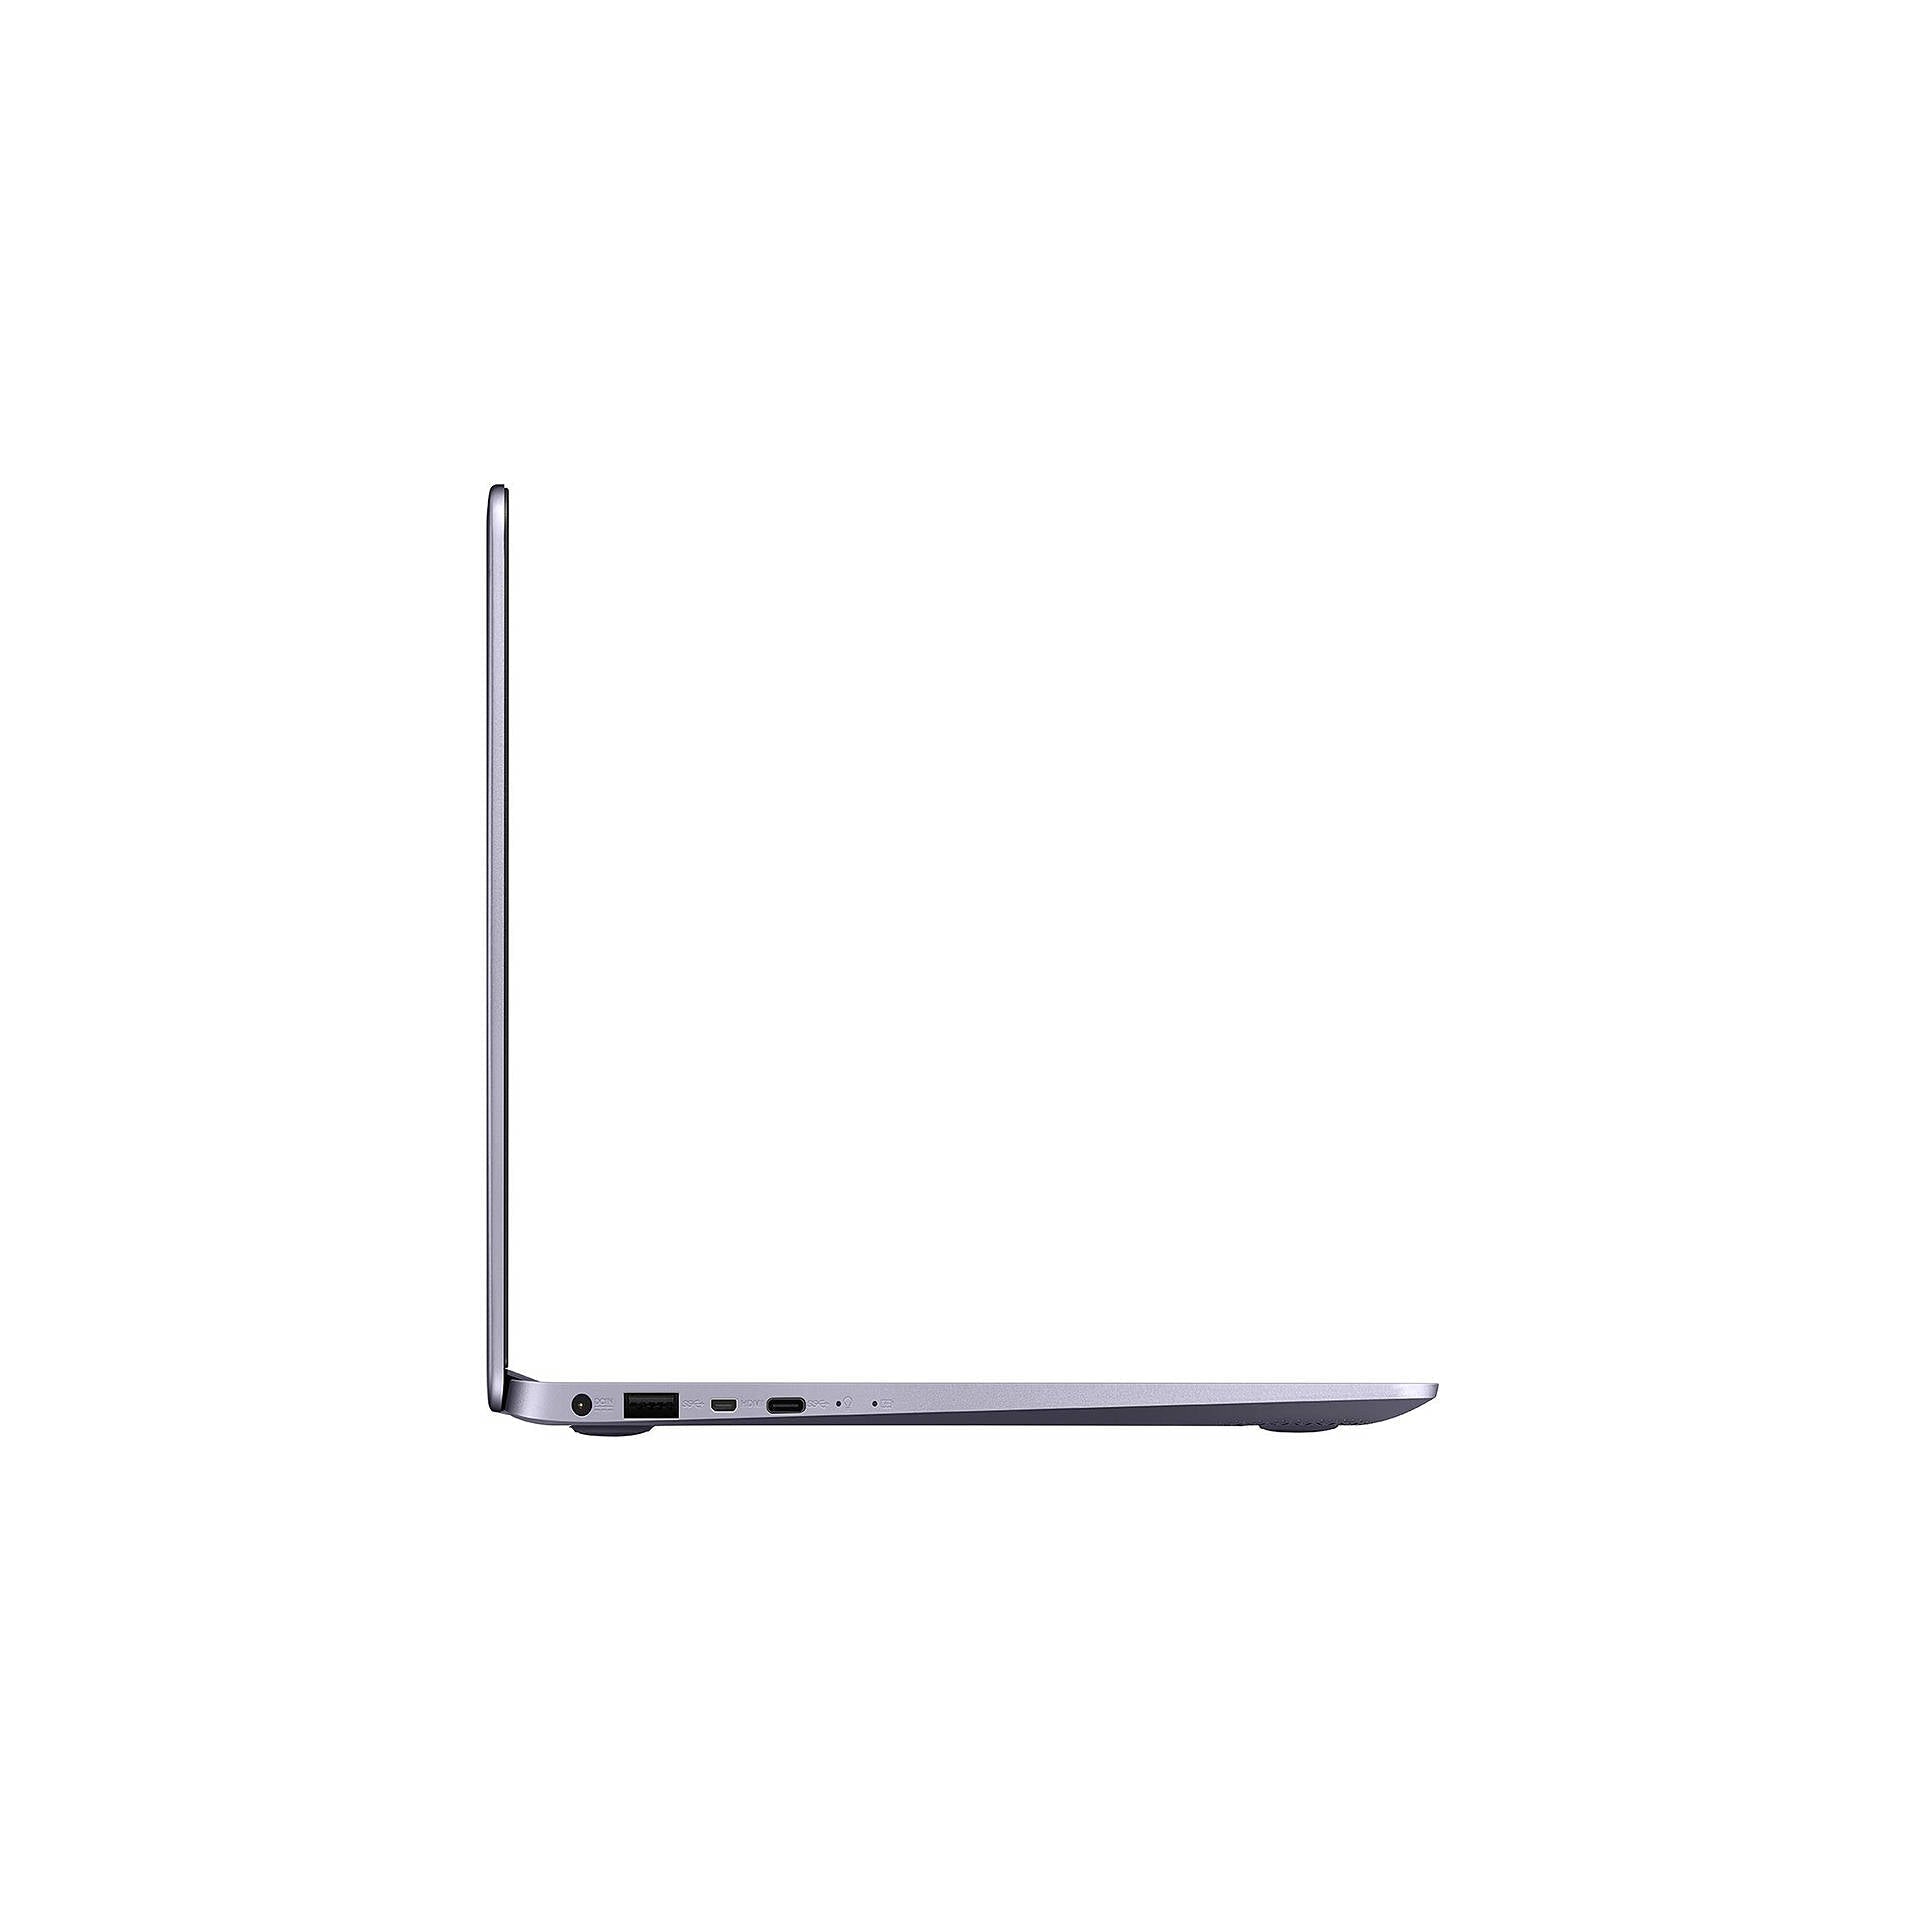 Asus VivoBook S14 S406UA-BM216T Laptop, Intel Core i5, 4GB RAM, 256GB SSD, 14.1”, Full HD, Grey